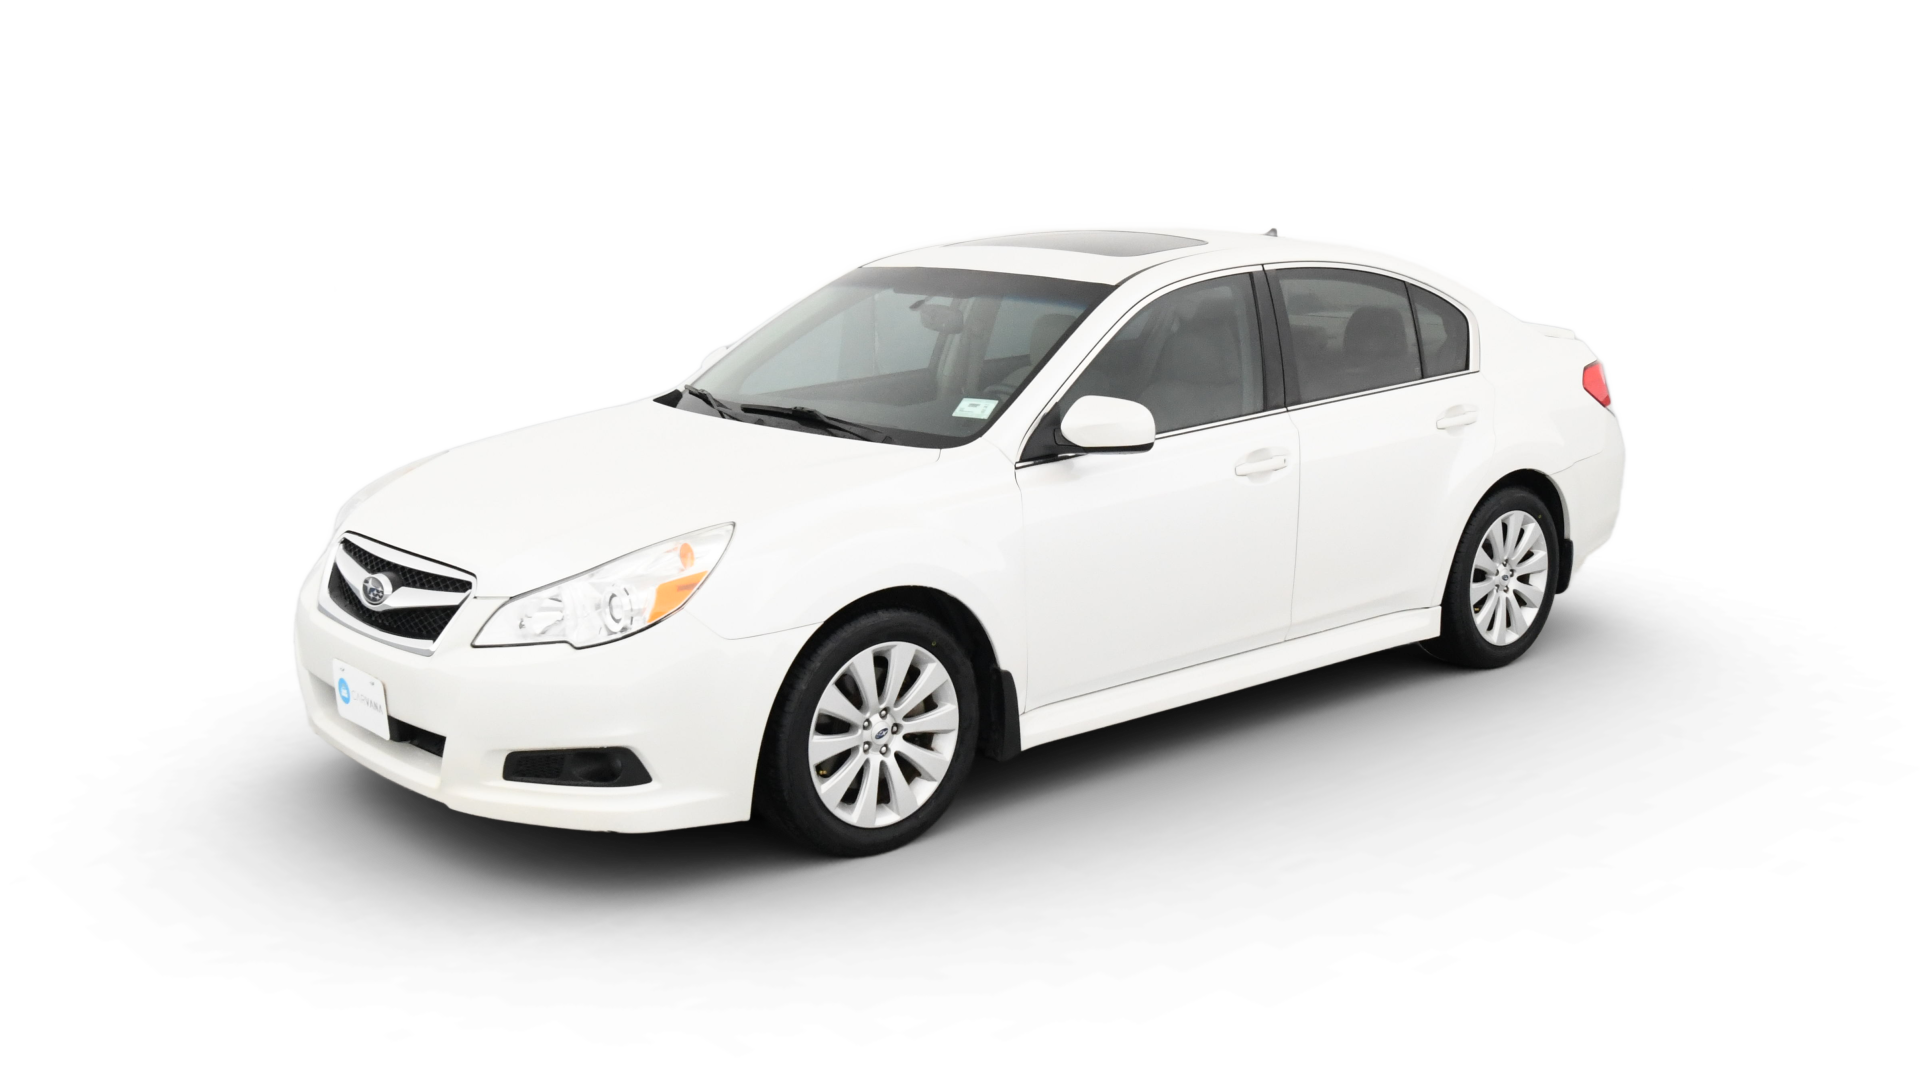 Subaru Legacy model image.